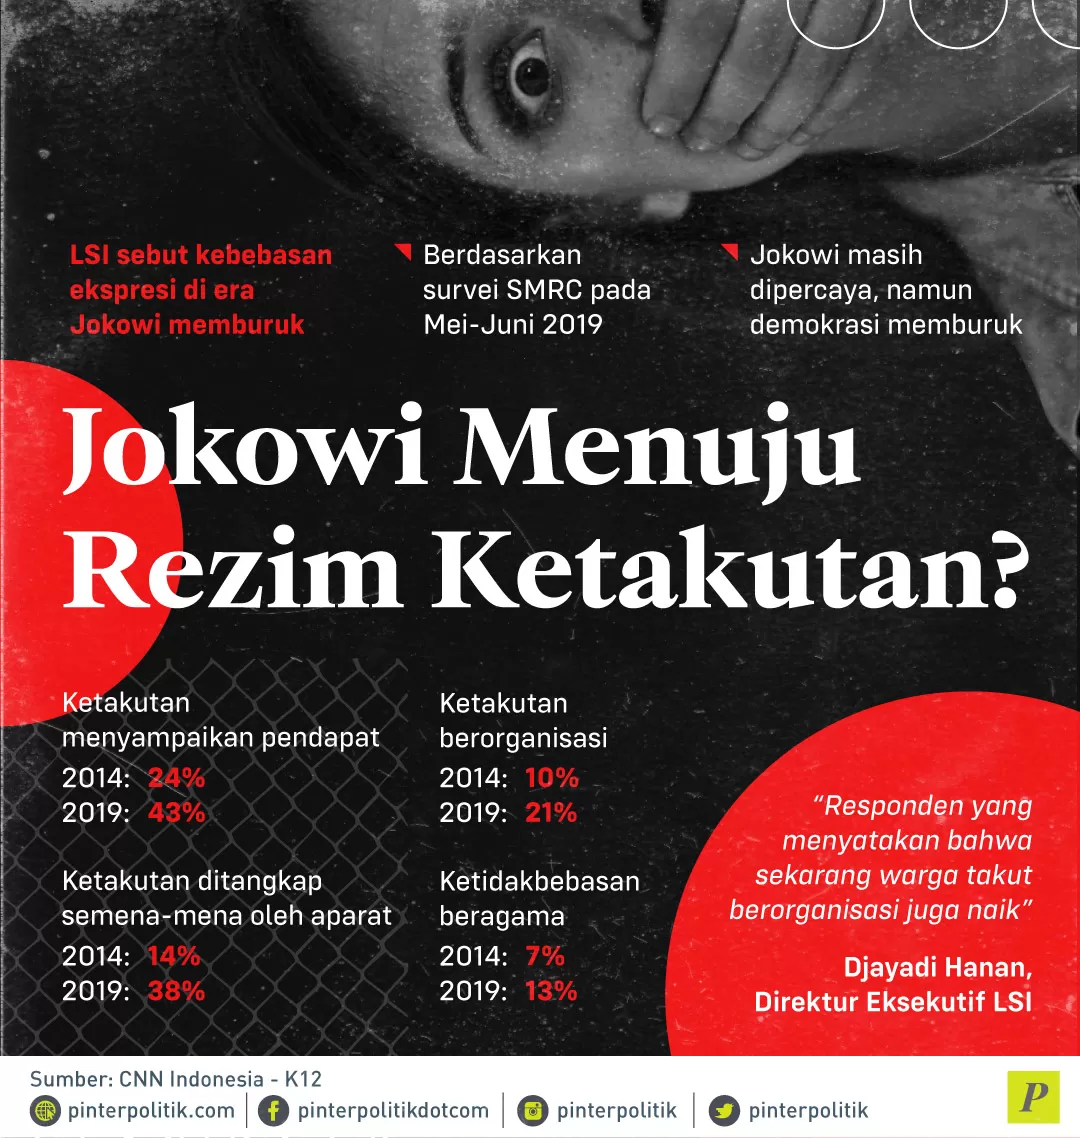 LSI sebut kebebasan ekspresi di era Jokowi memburuk